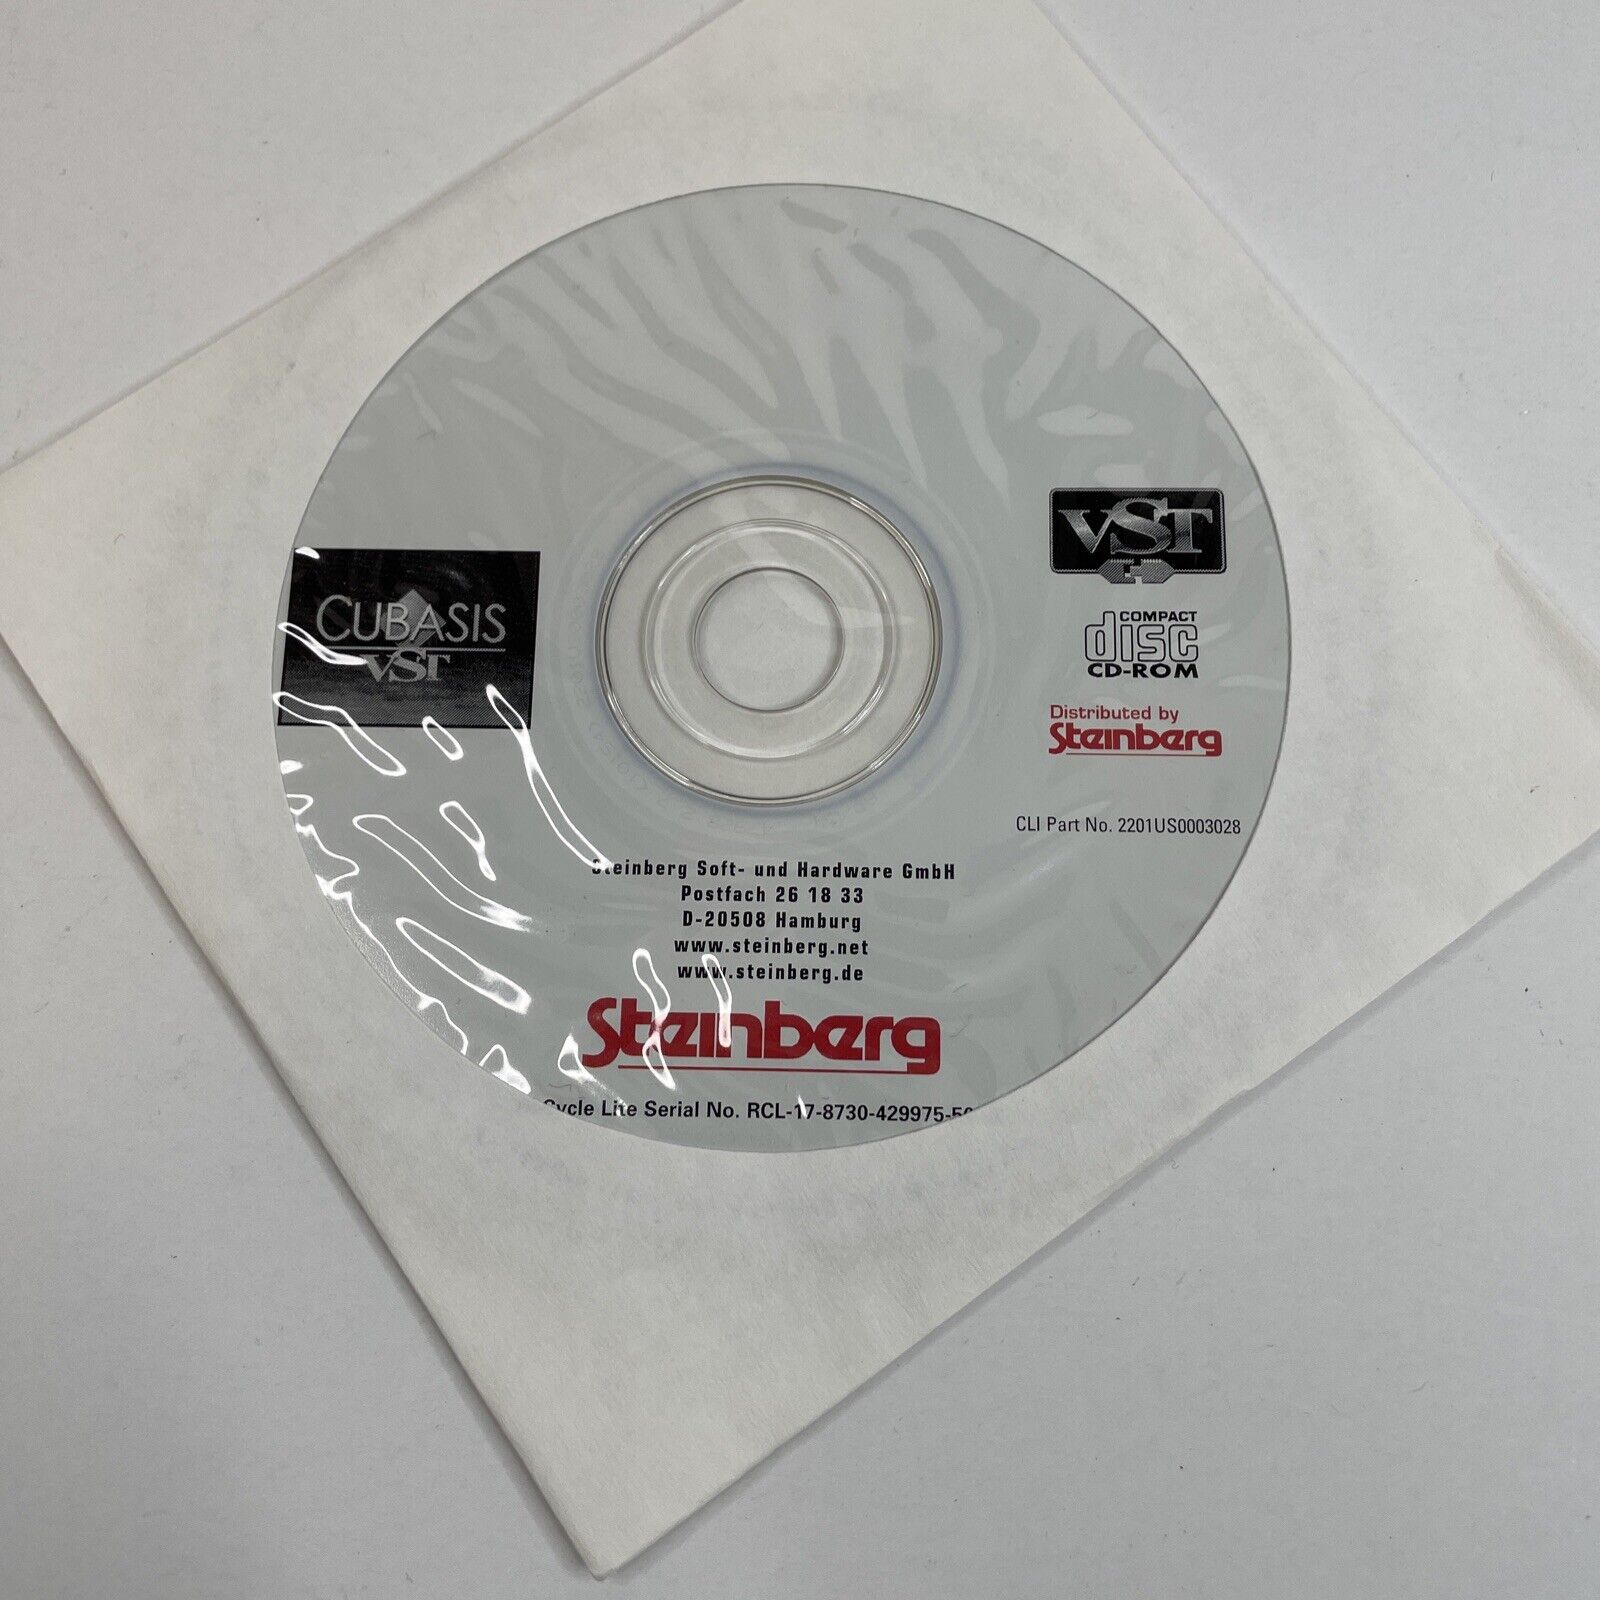 Rare Original Cubasis VST Steinberg Software 1999 Extremely Rare Vintage Audio